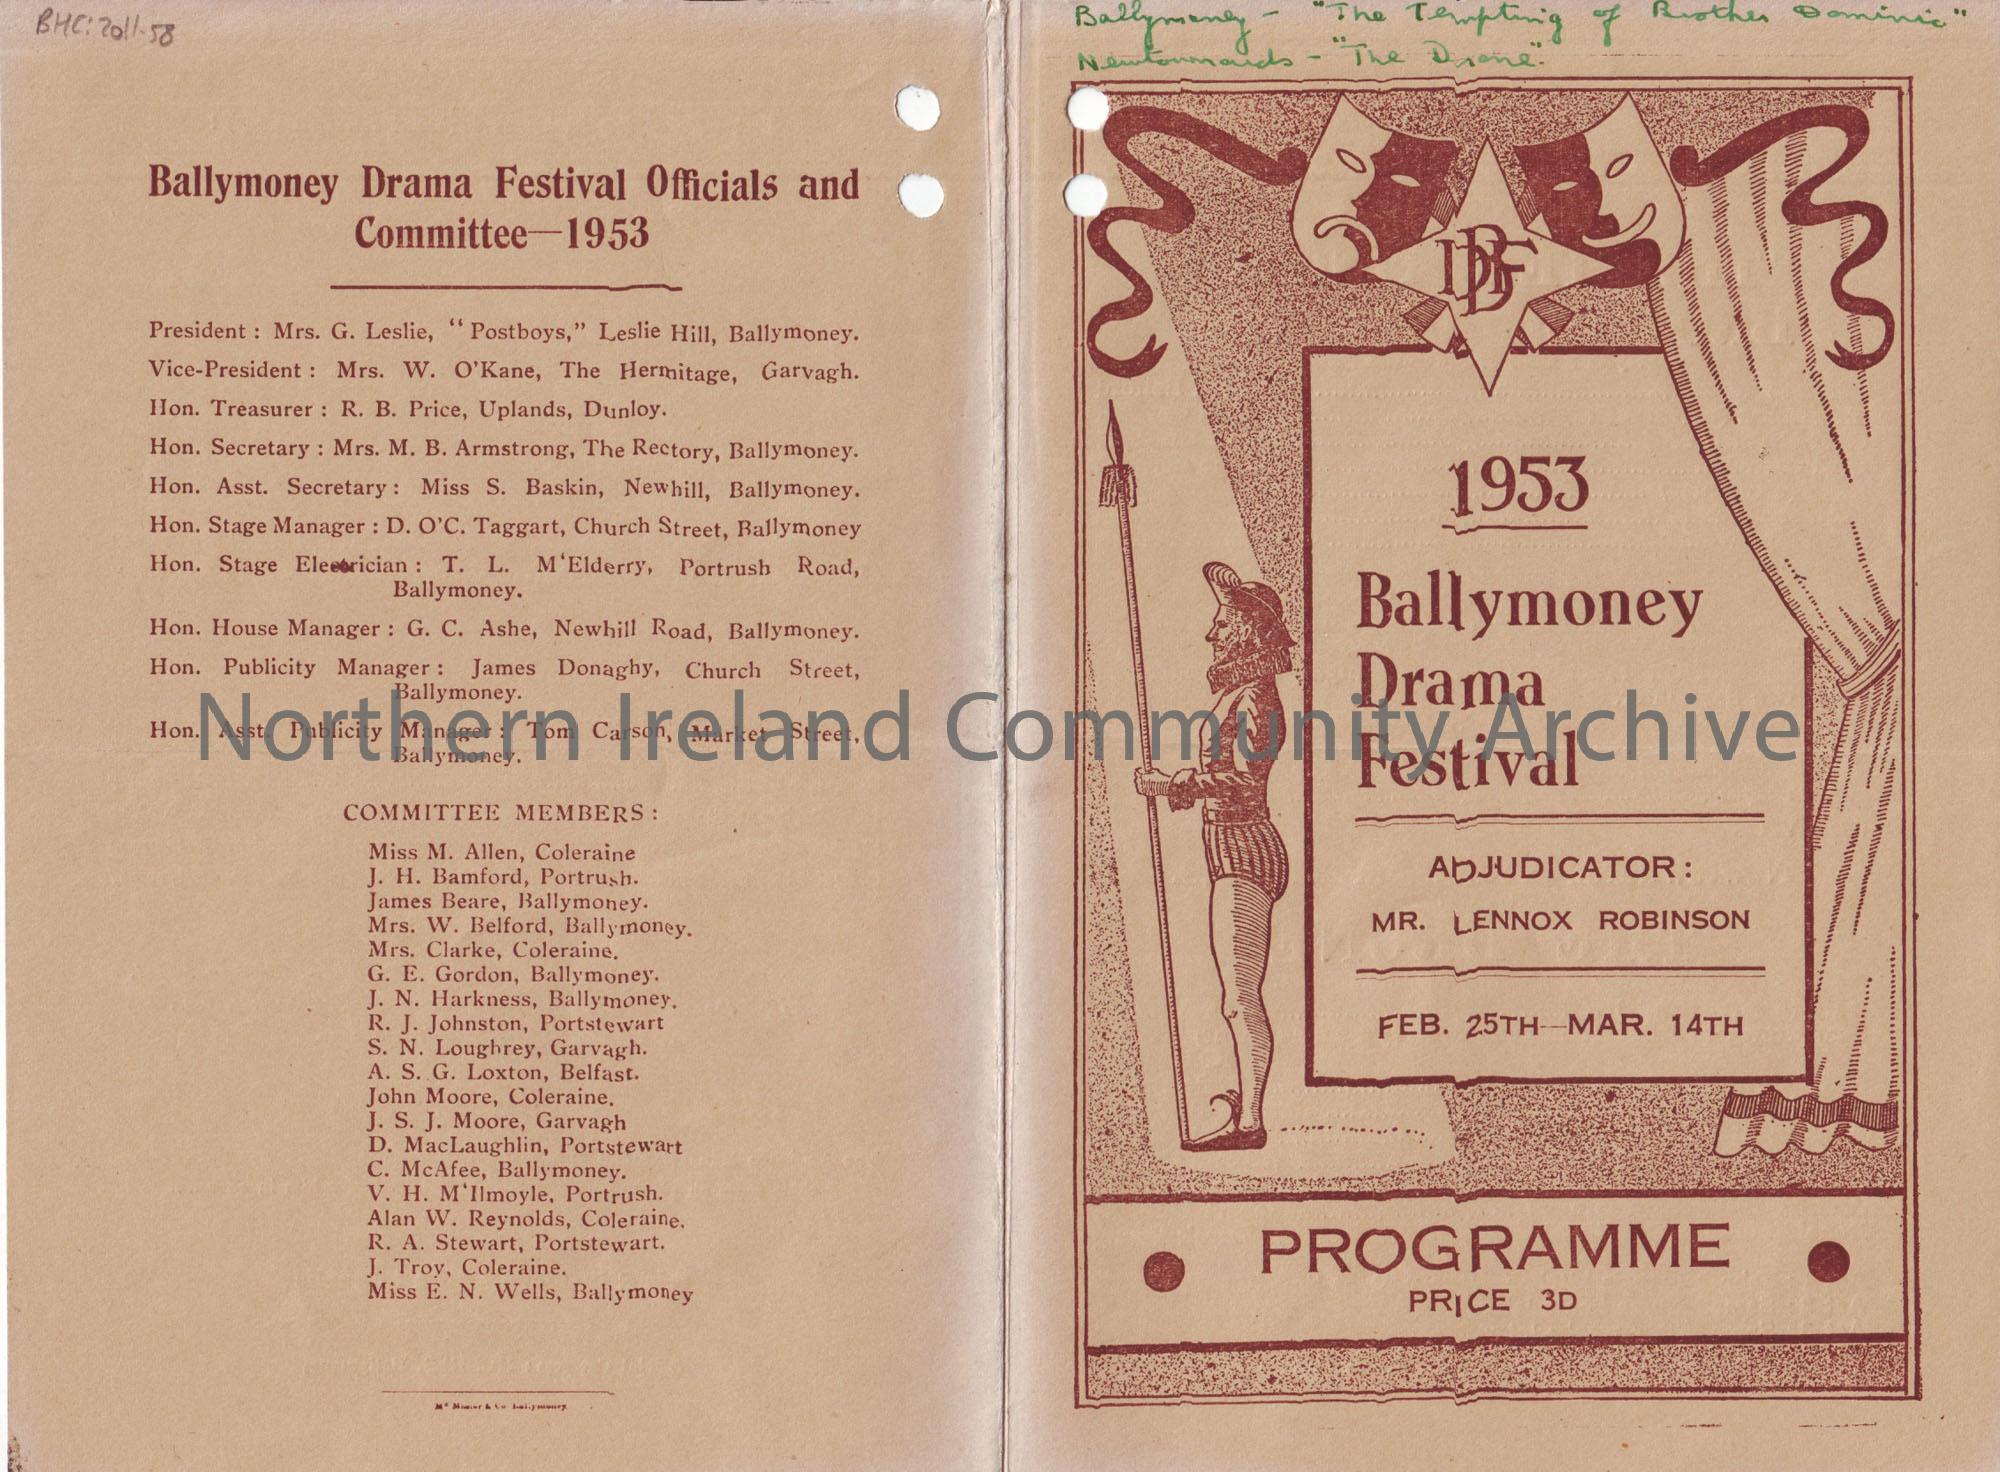 Programme for Ballymoney Drama Festival 1953